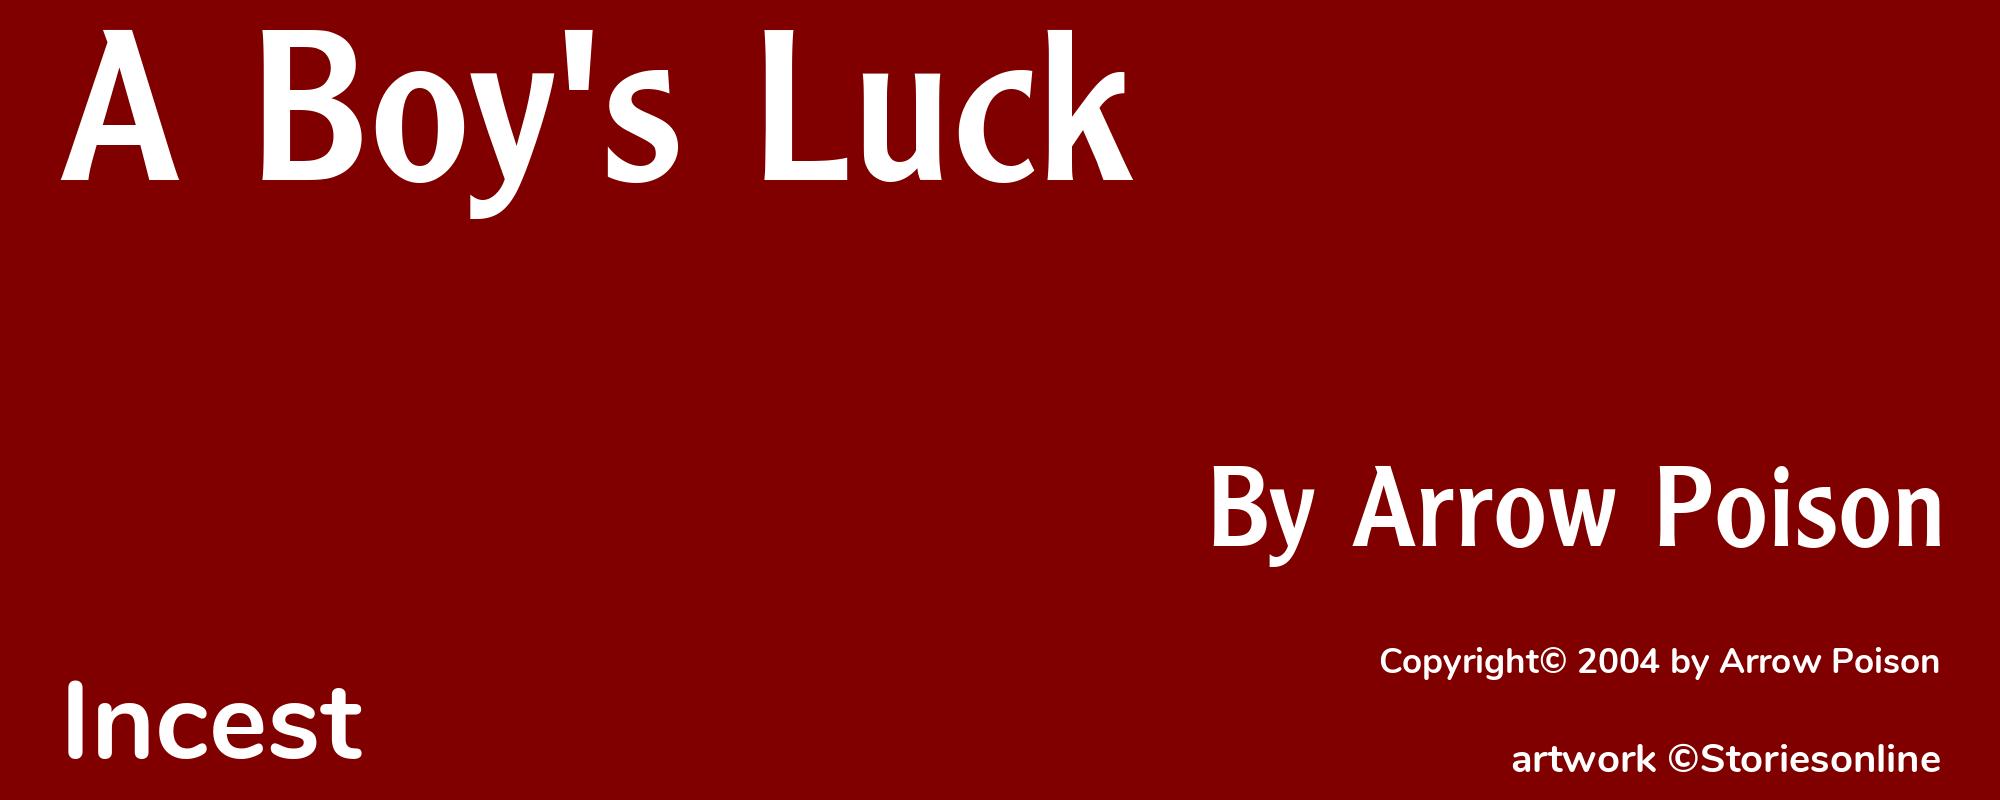 A Boy's Luck - Cover